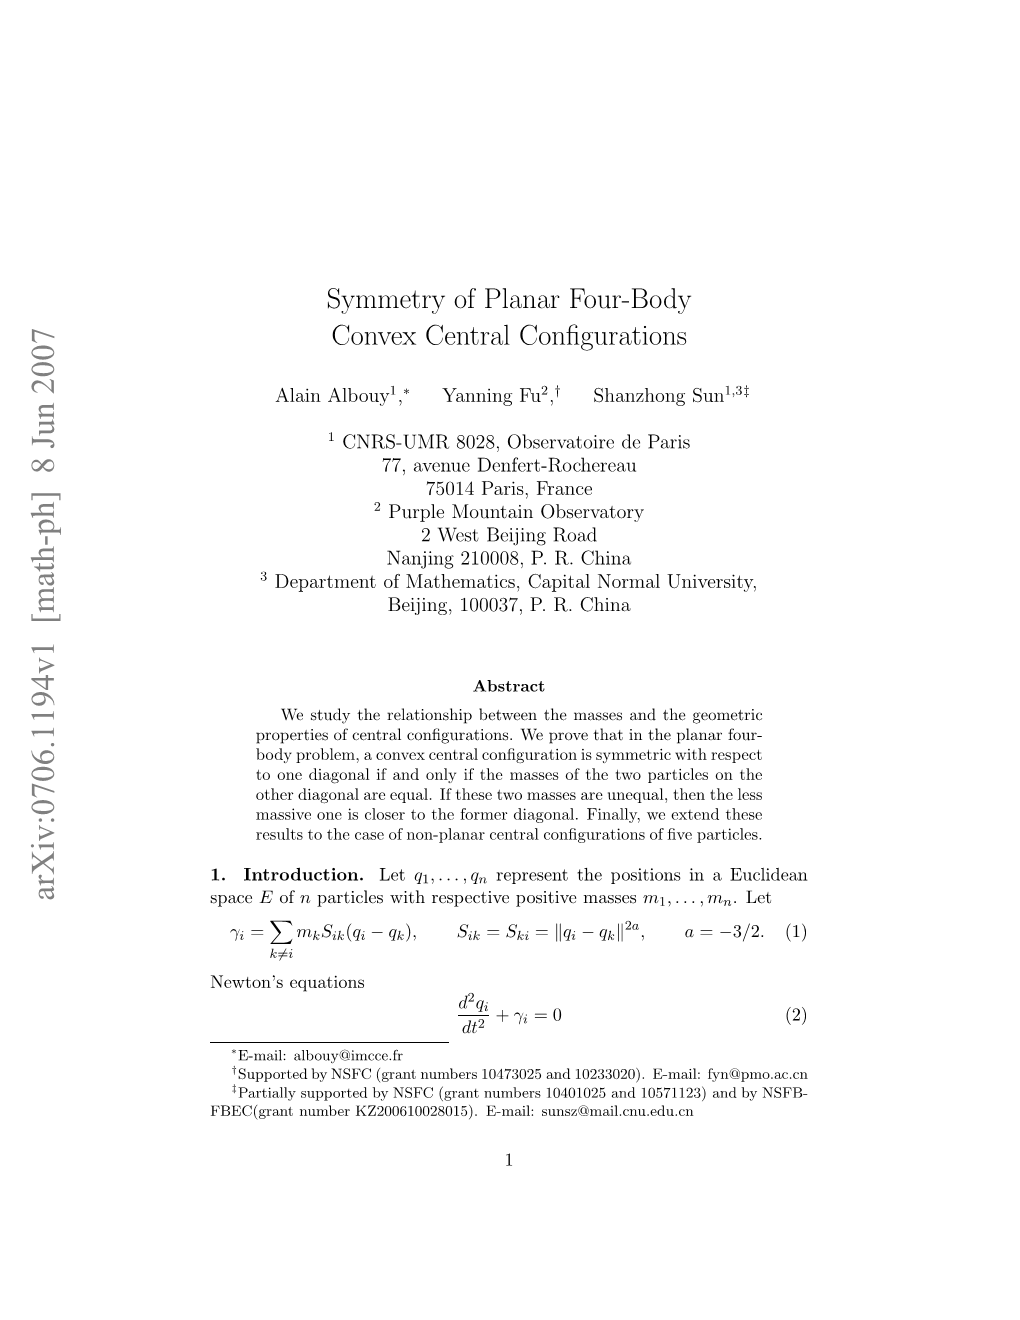 Symmetry of Planar Four-Body Convex Central Configurations